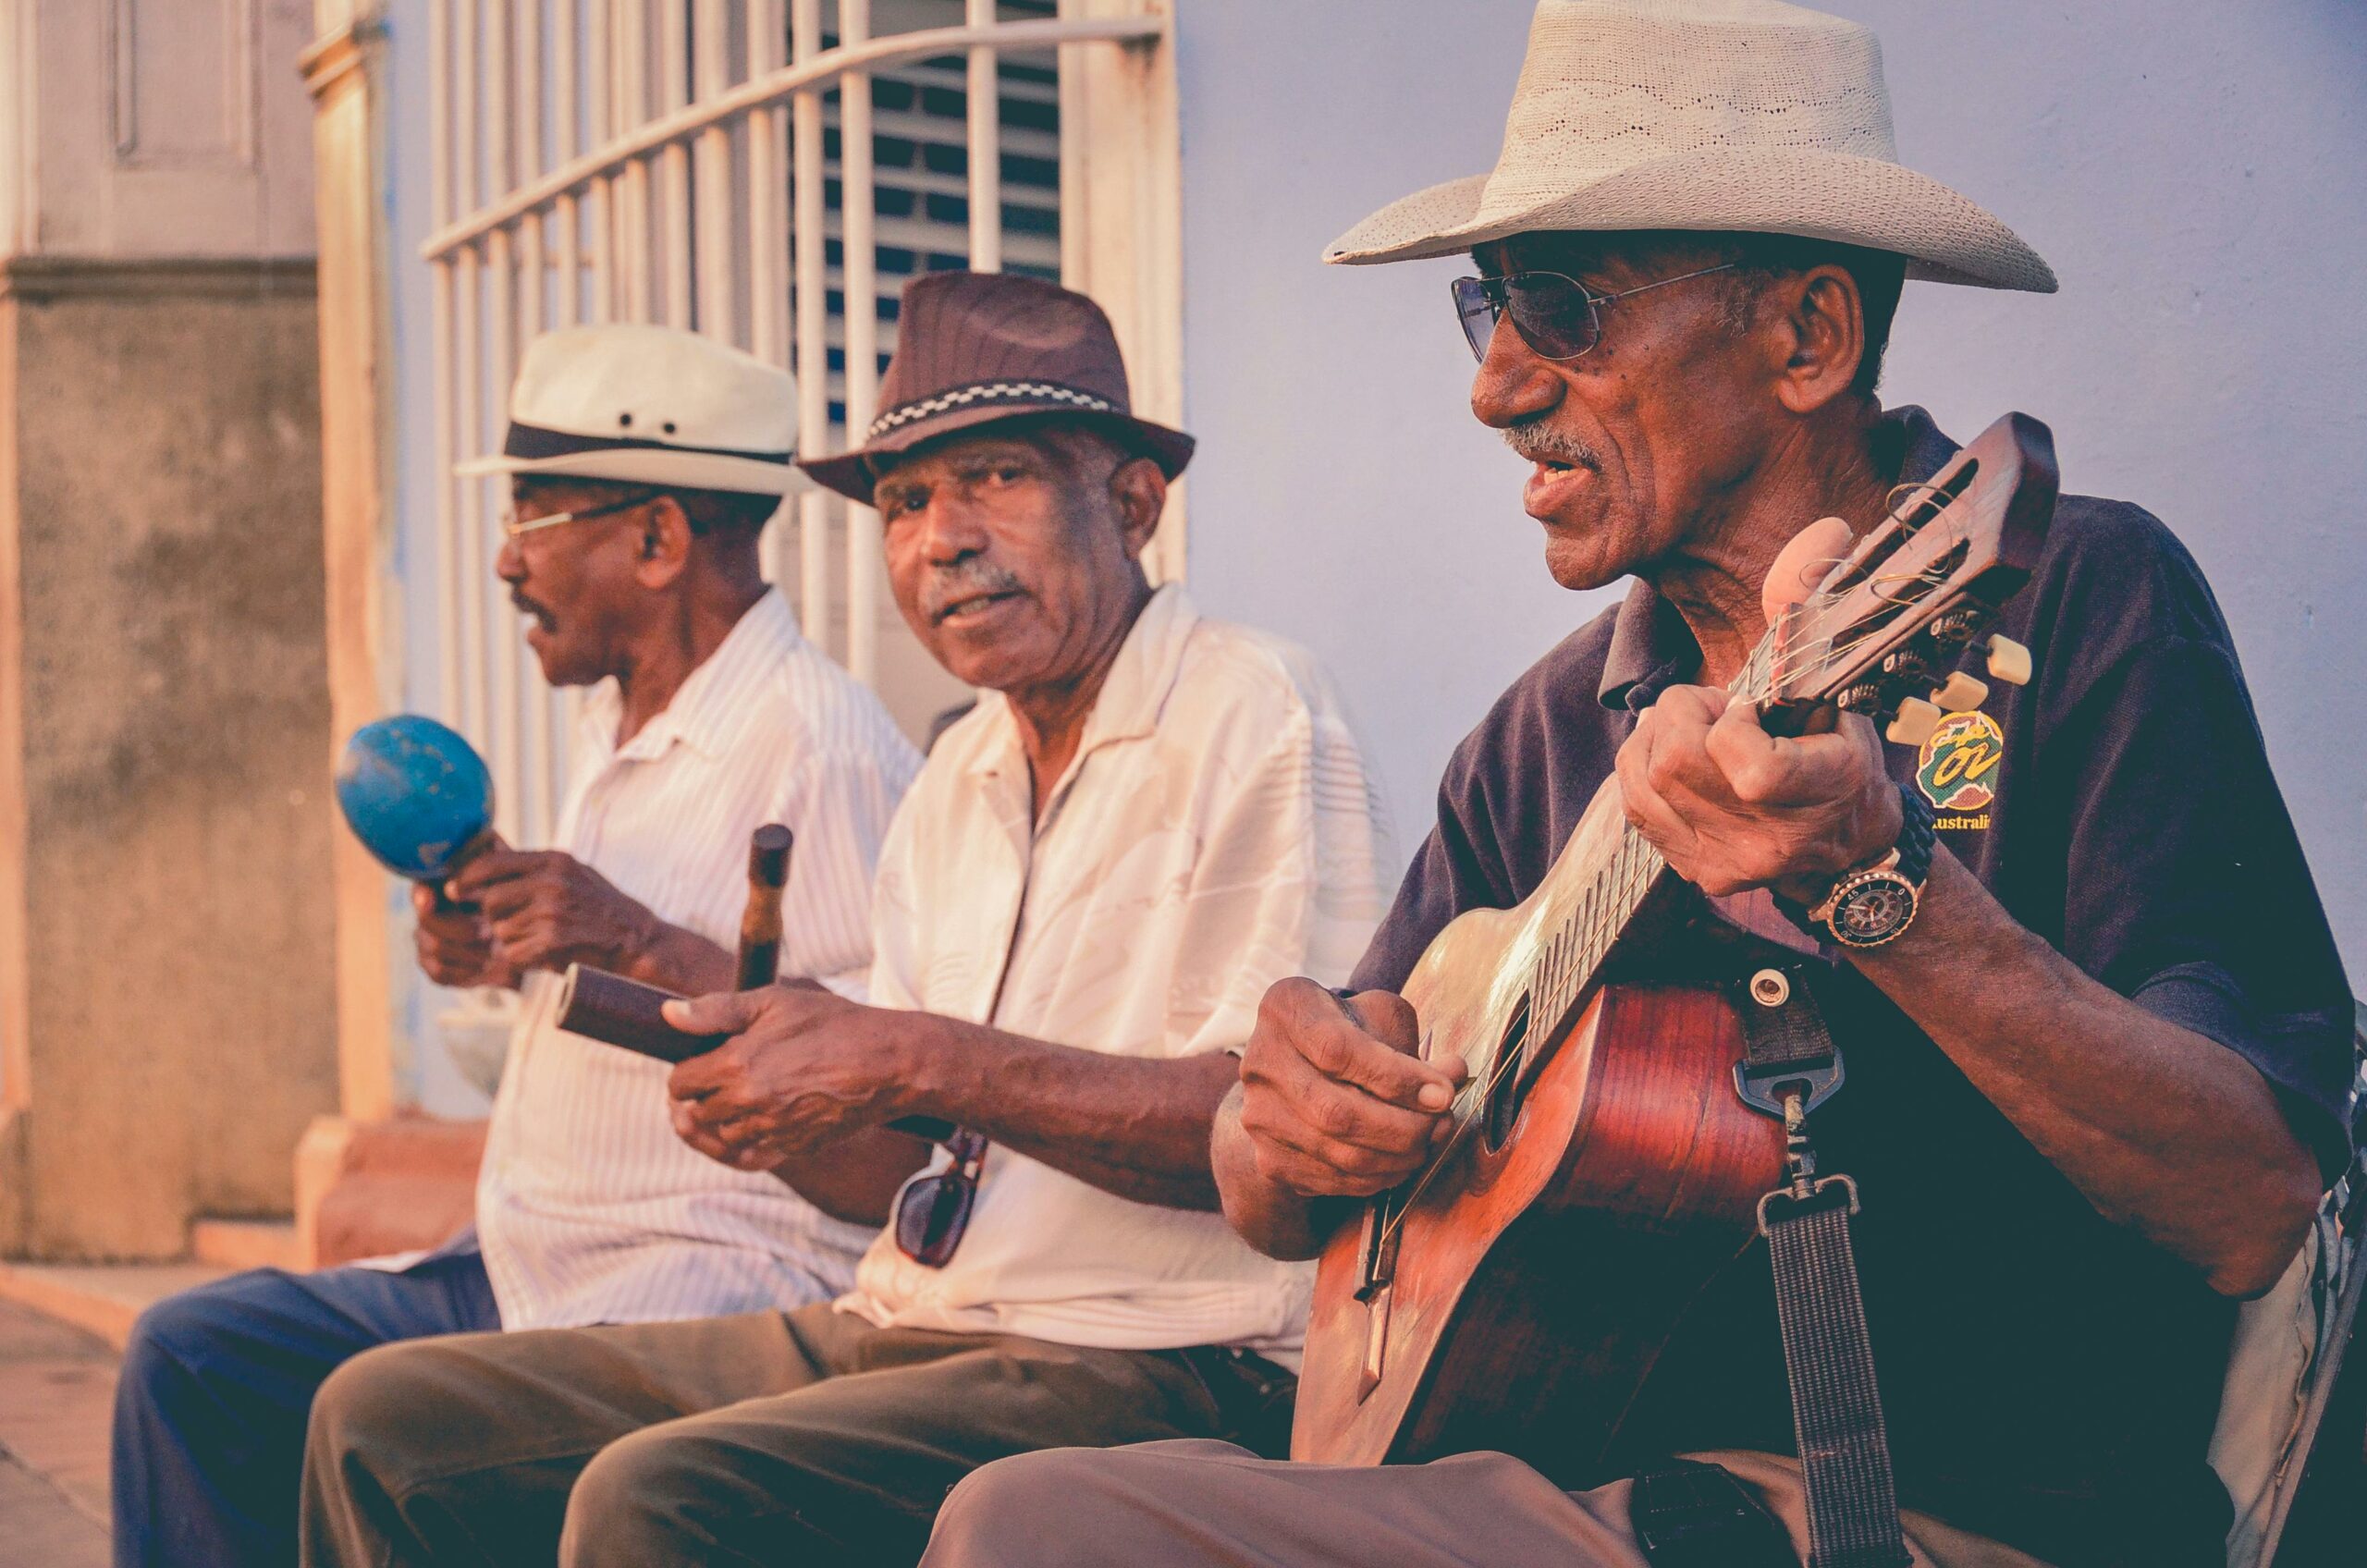 danser la salsa à Cuba